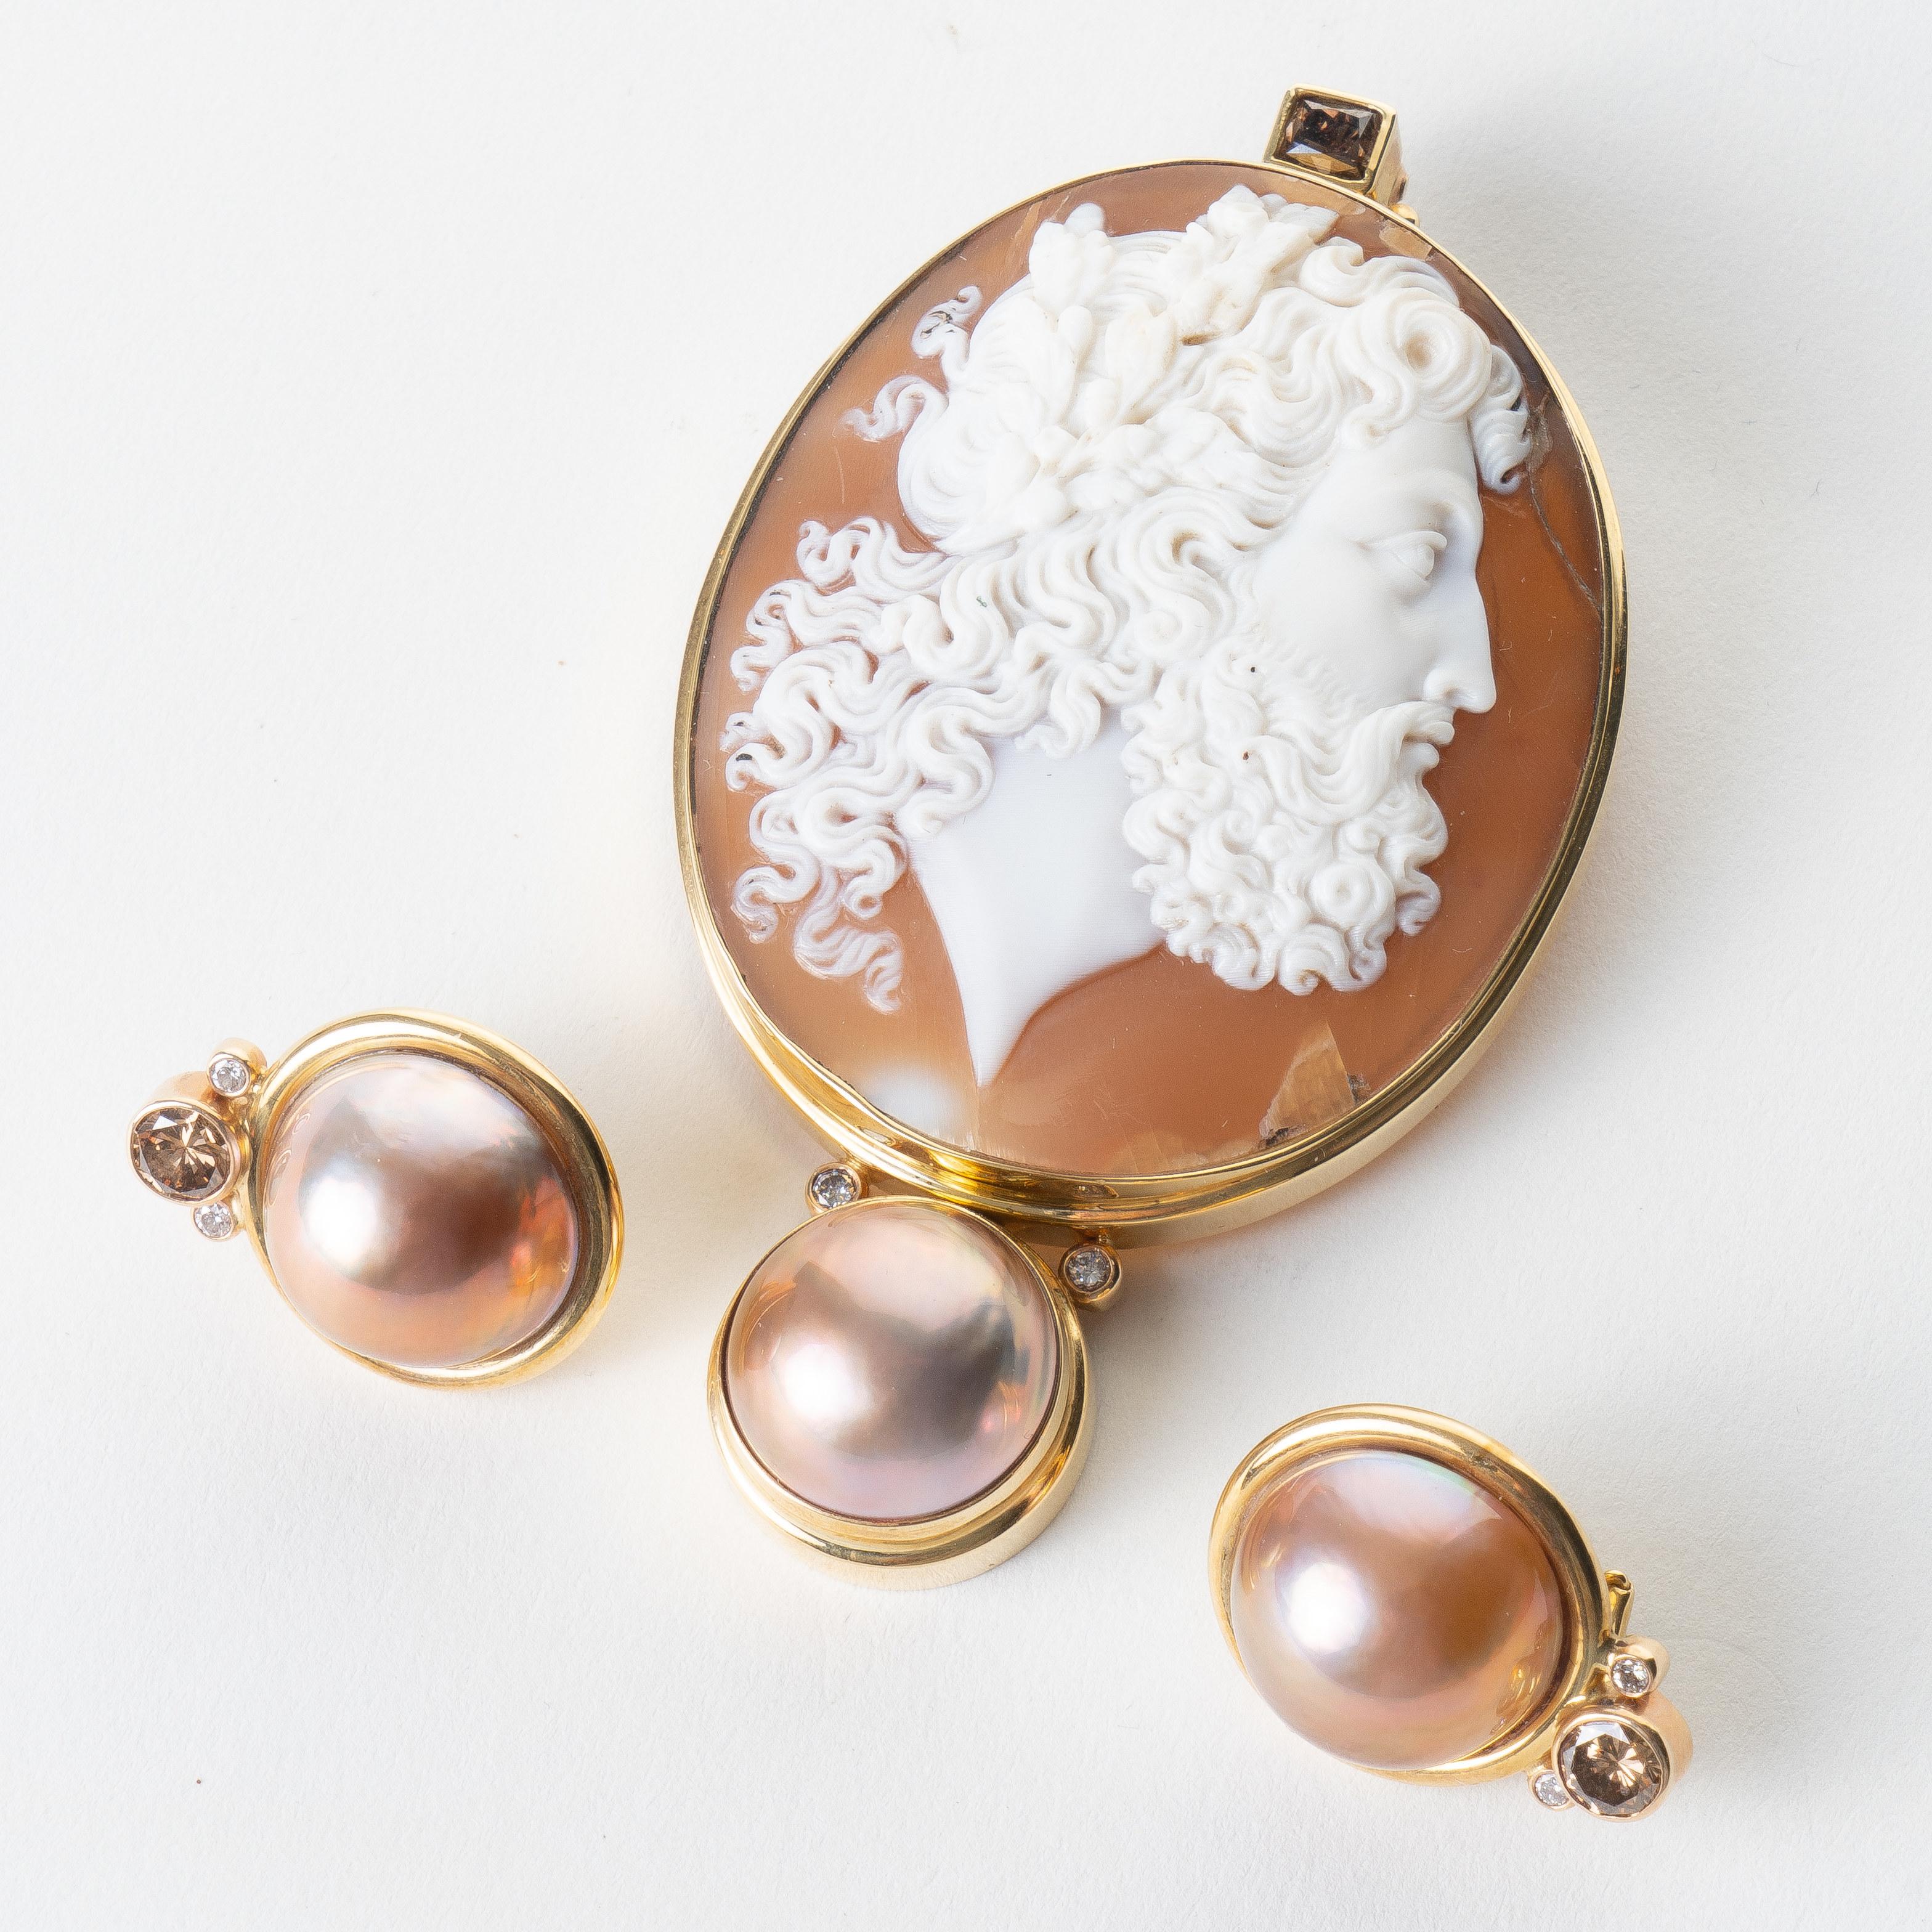 Italian cameo pendant & pearl earrings set For Sale 2